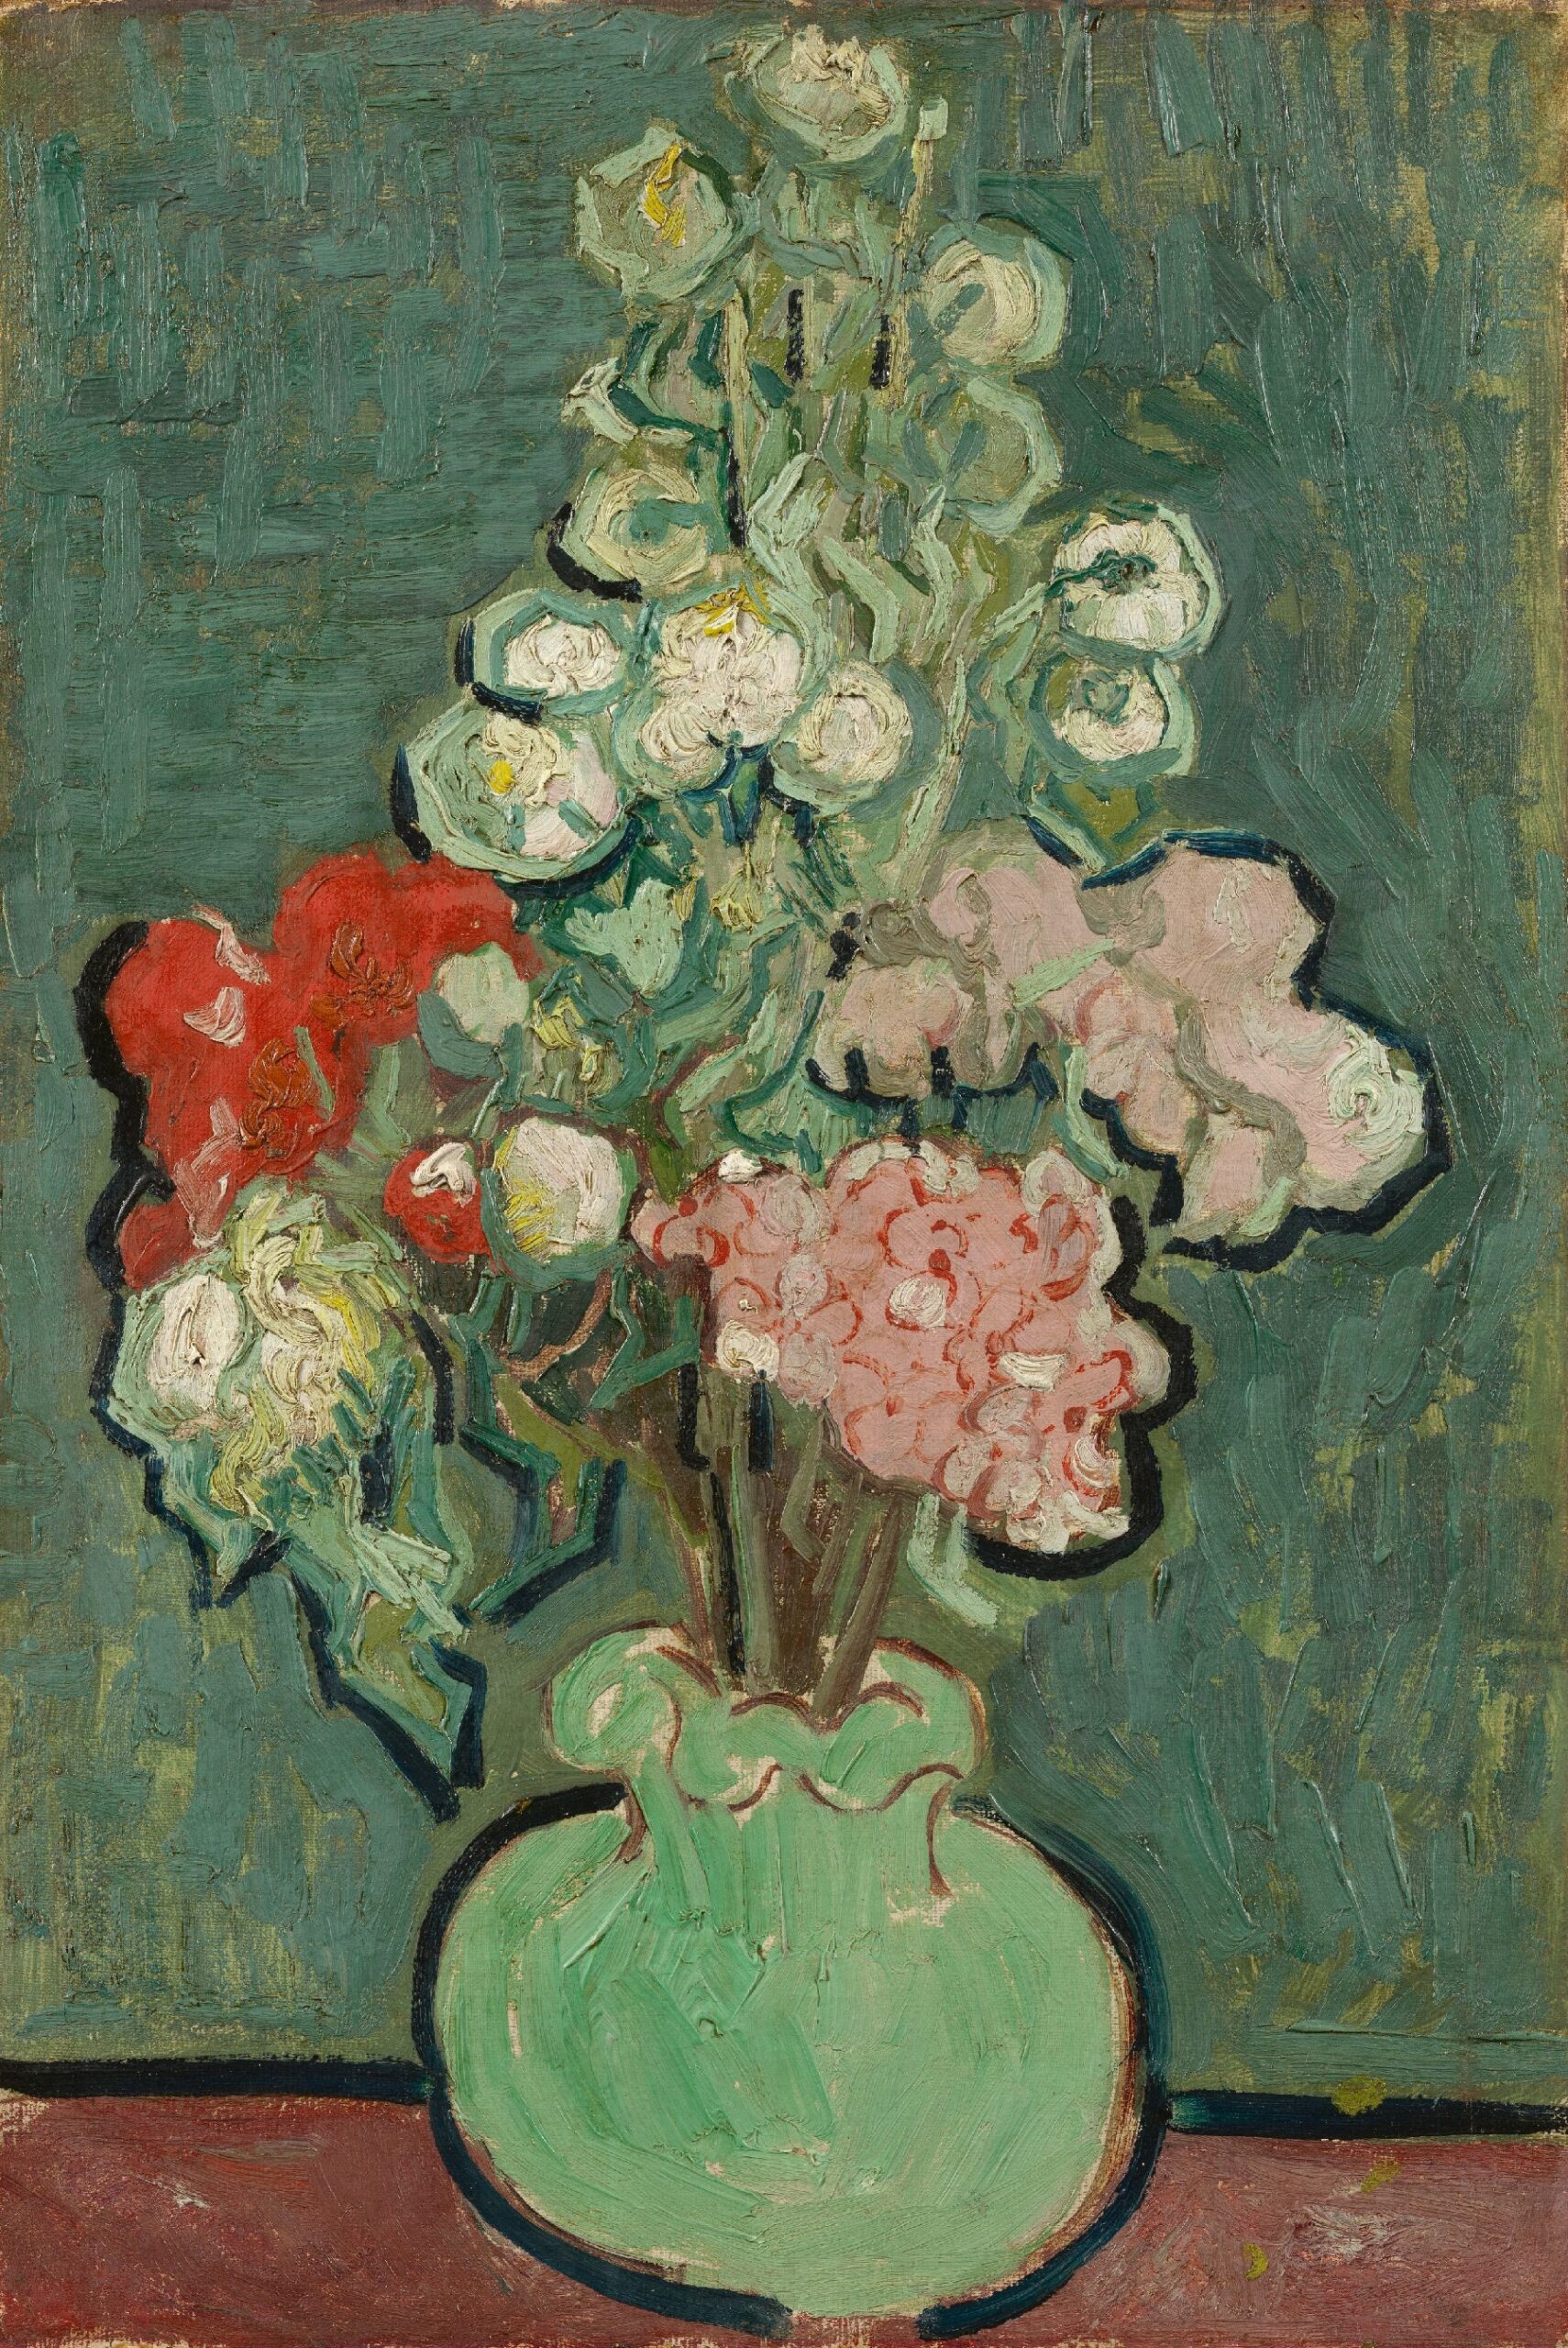 Vaas met bloemen Vincent van Gogh (1853 - 1890), Auvers-sur-Oise, juni 1890